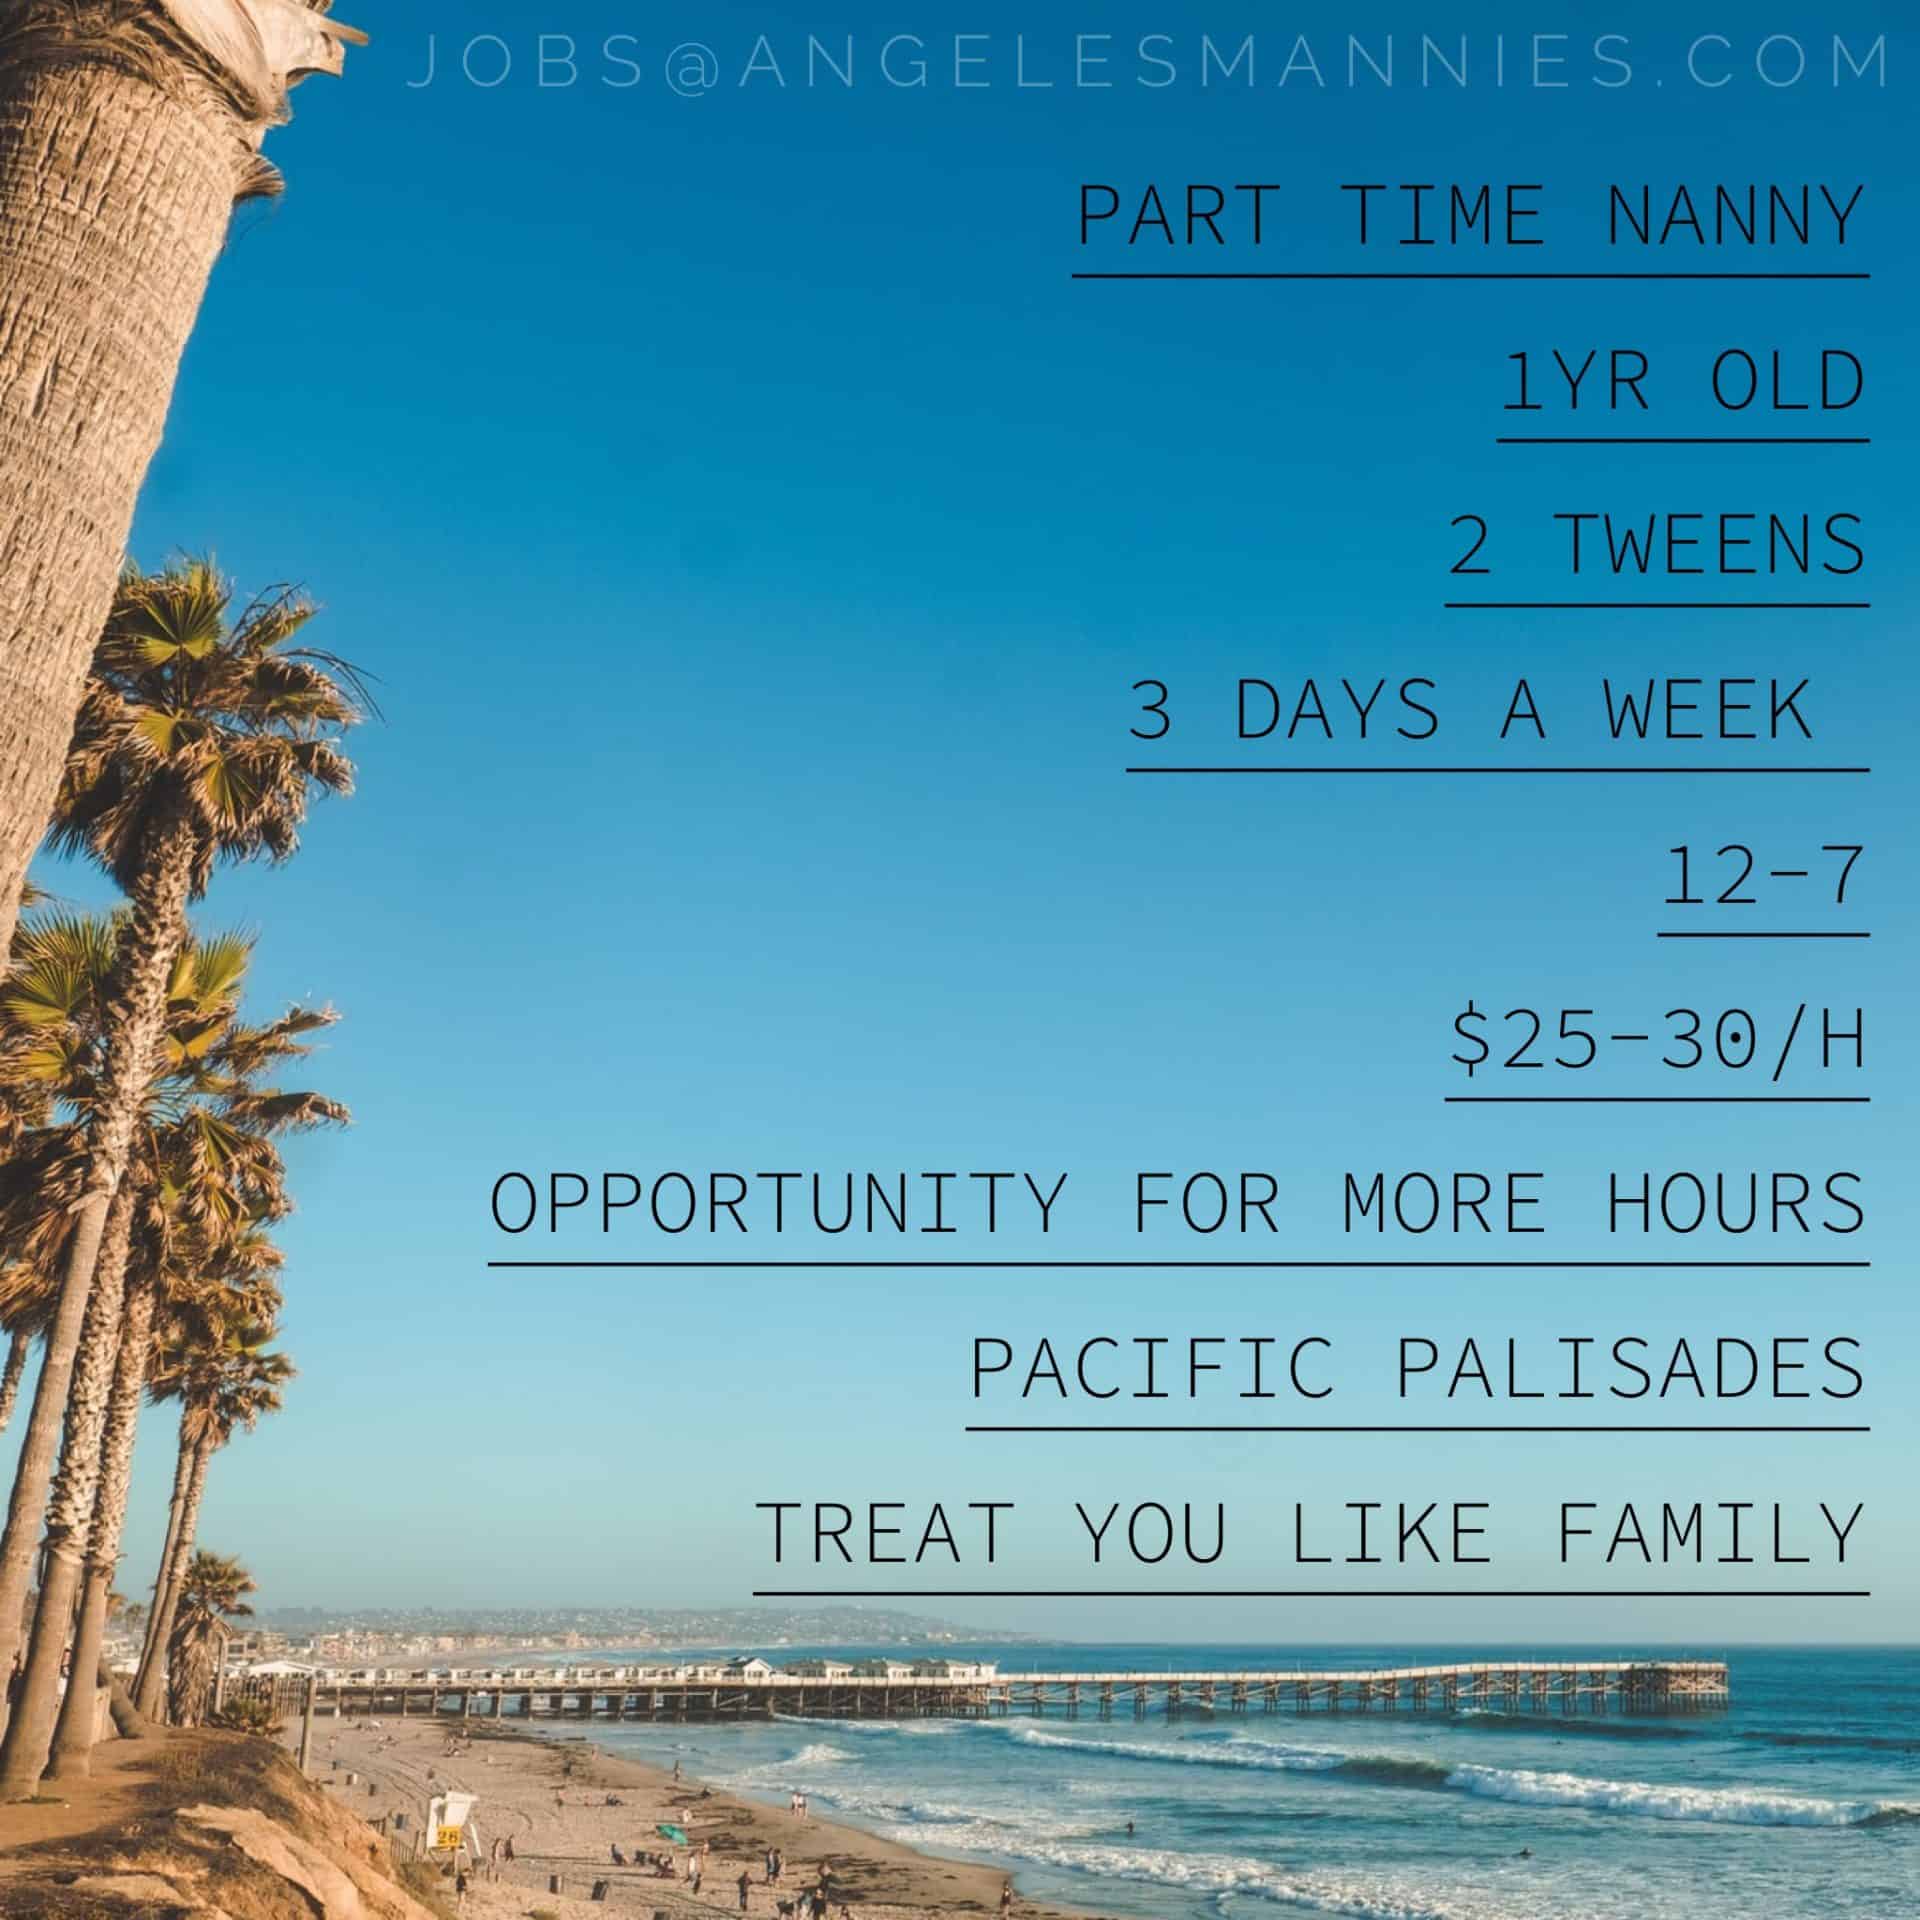 Los Angeles Nanny Job Postings Find A Family Nannies